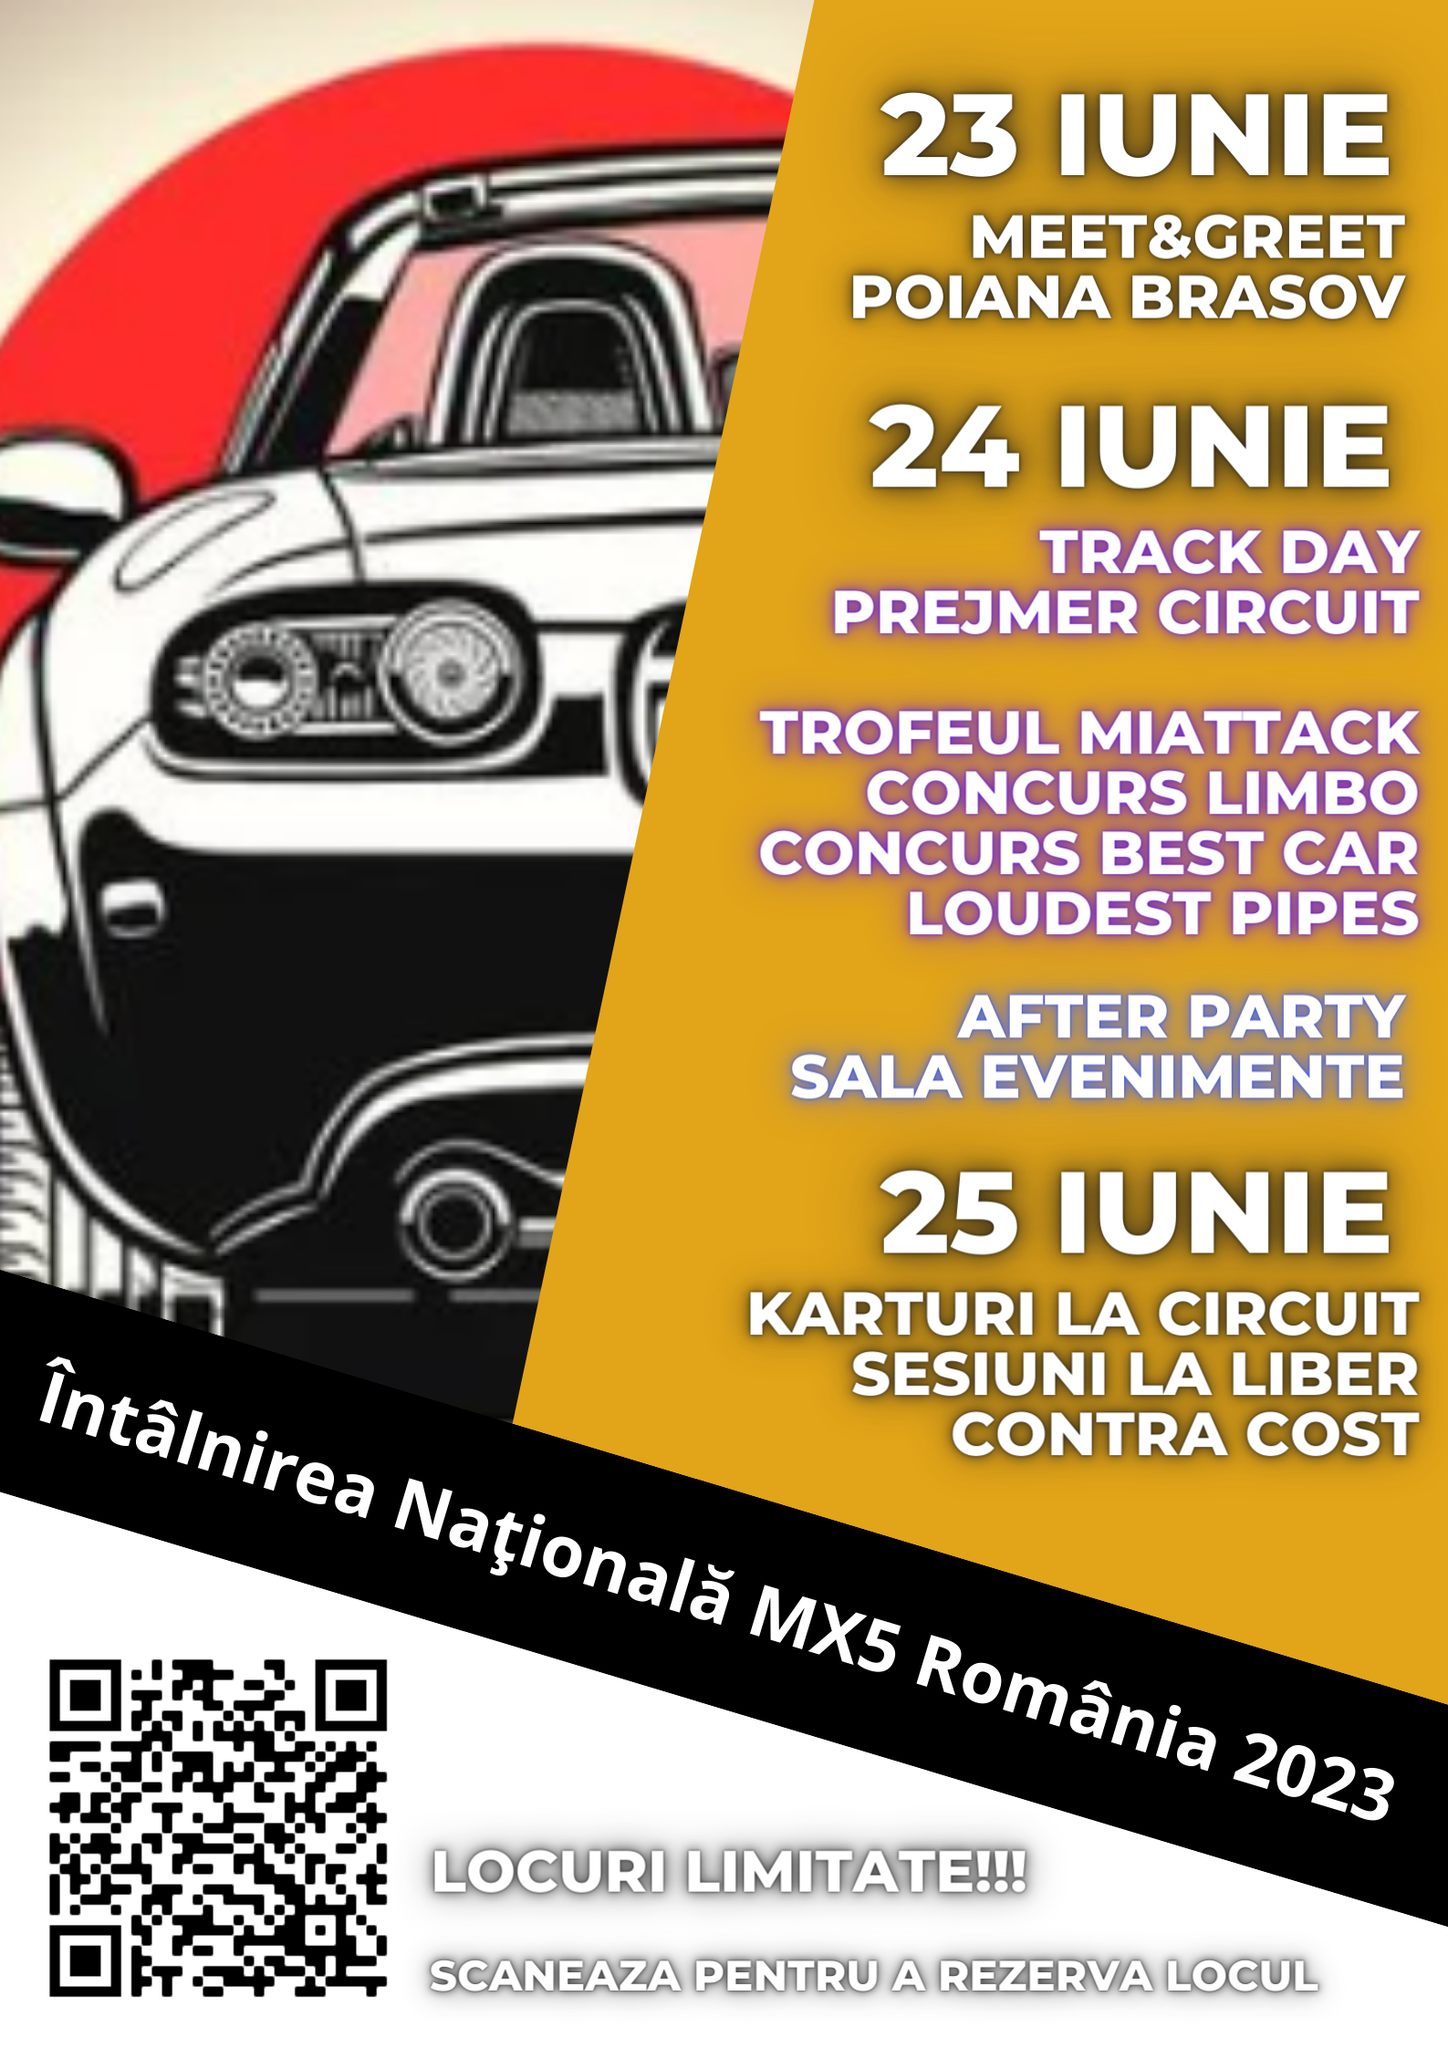 Poster Intalnirea Nationala MX5 Romania 2023